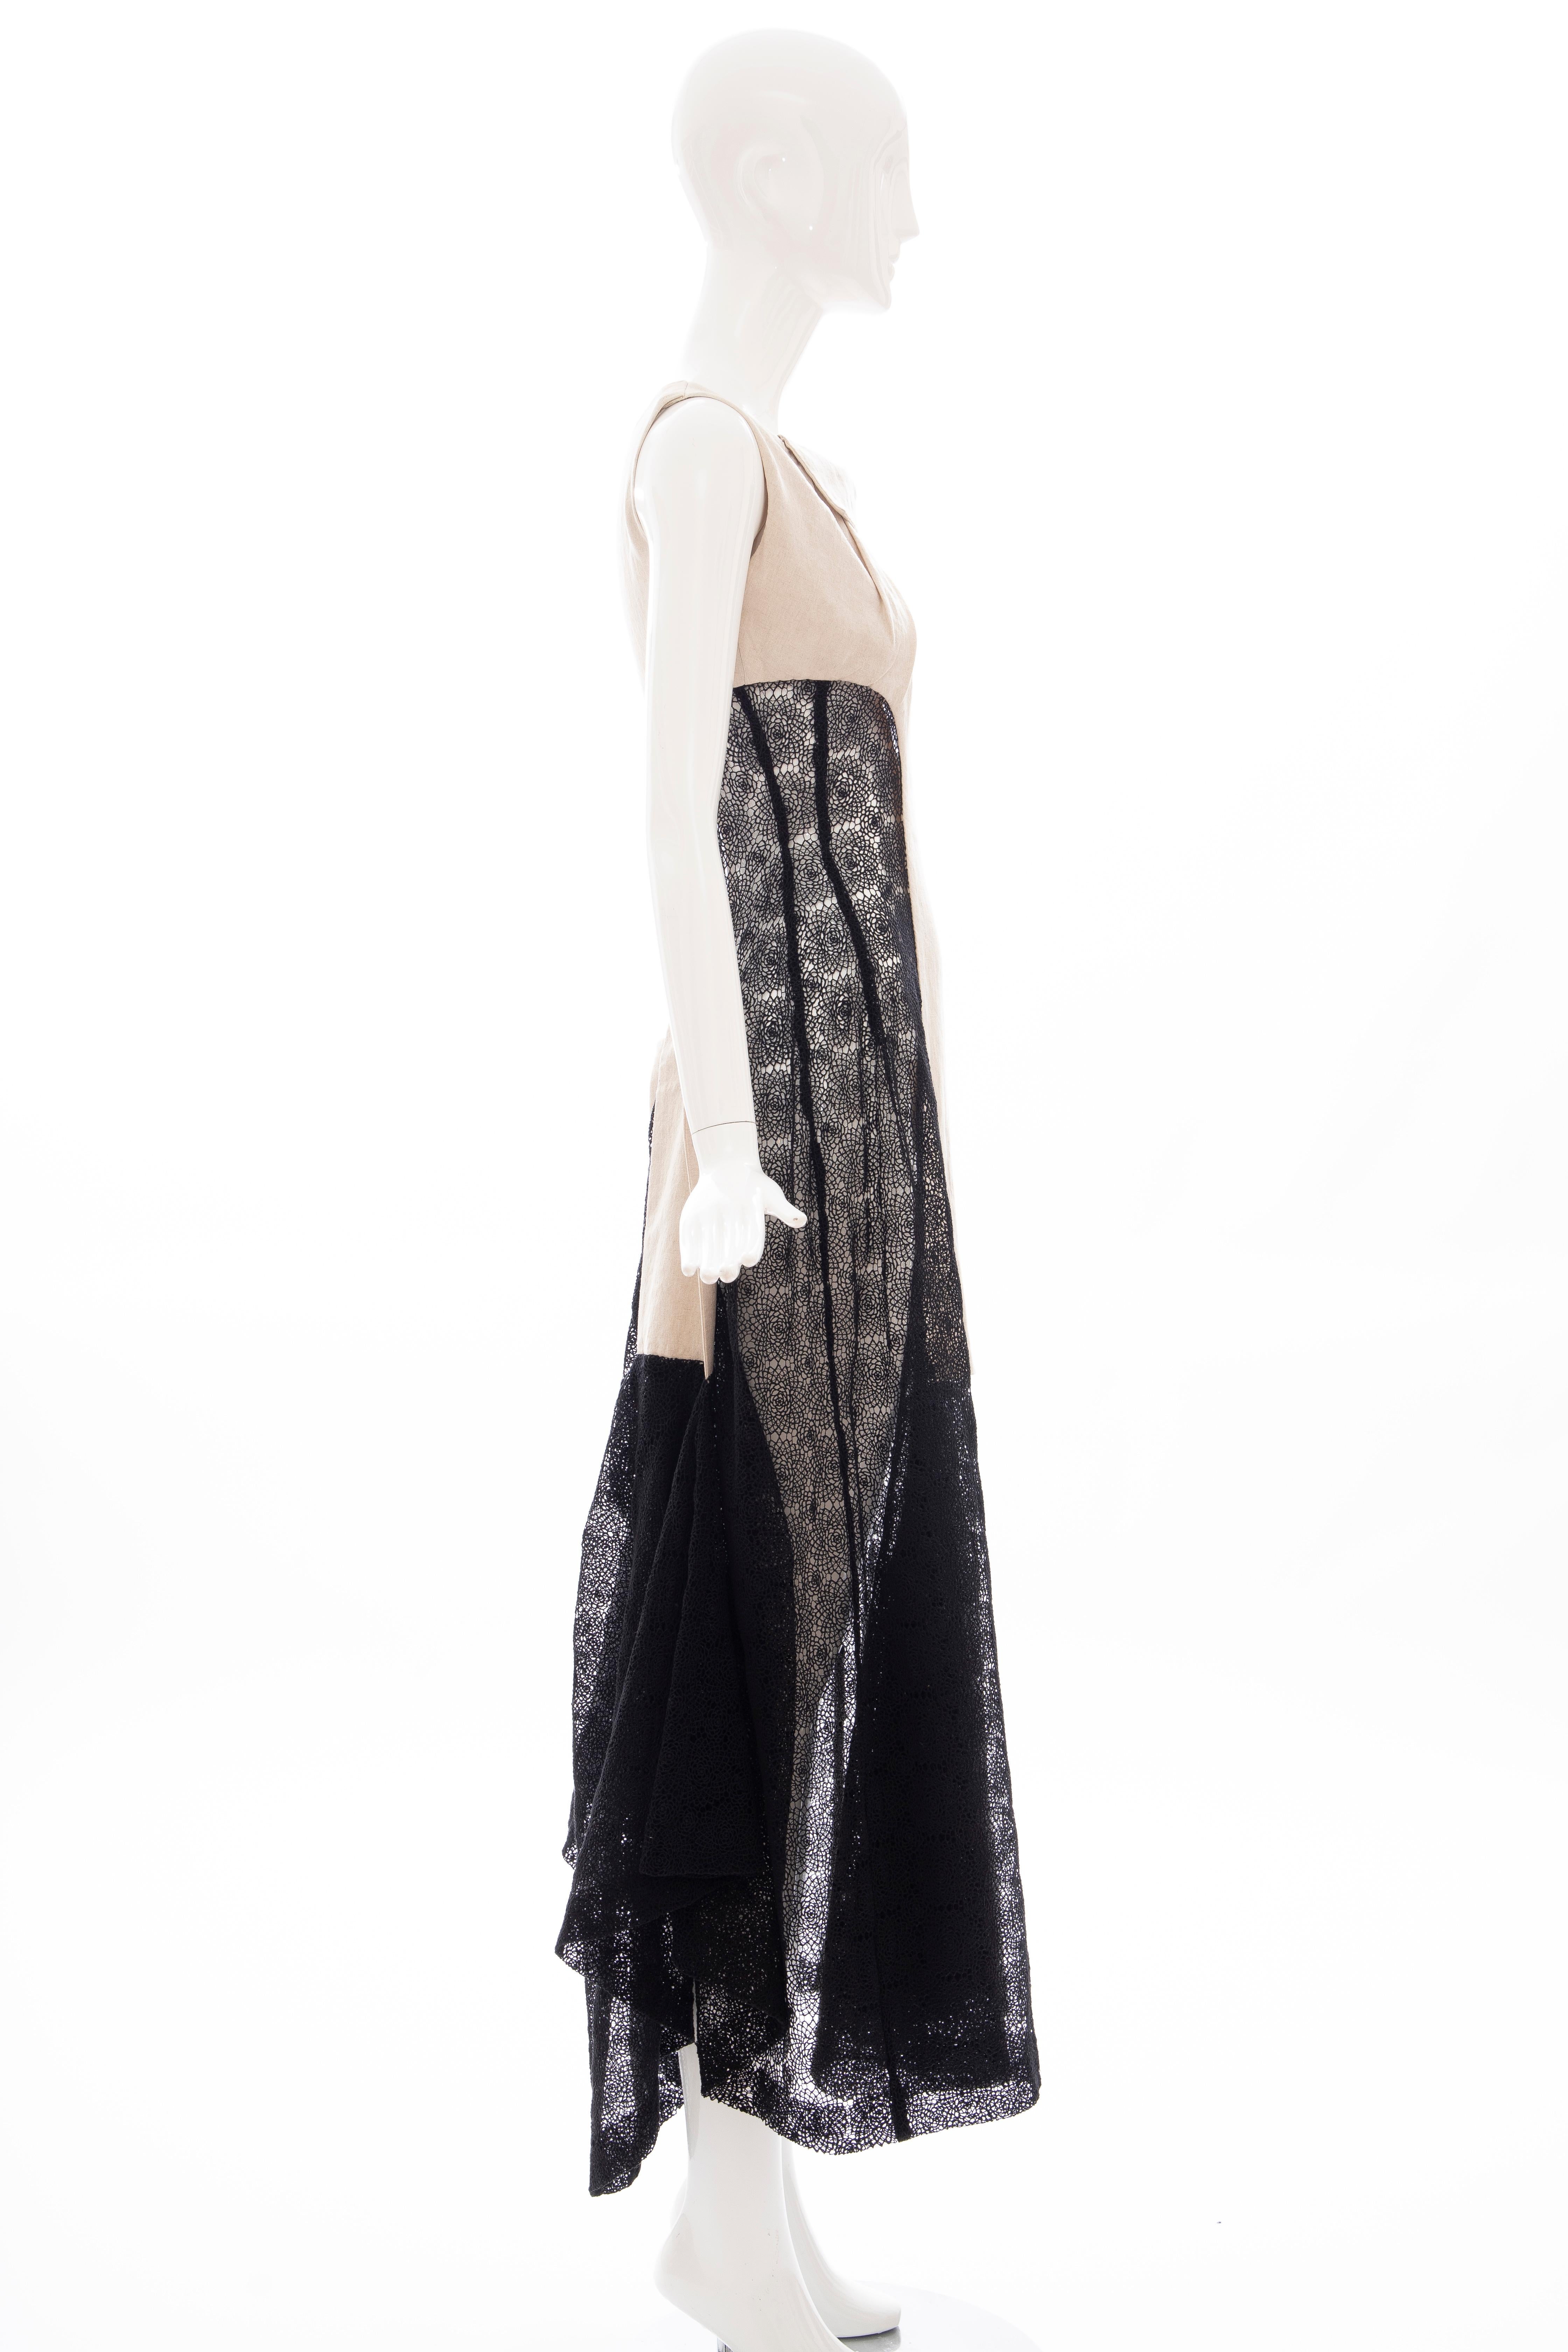 Yohji Yamamoto Runway Black Cotton Lace & Natural Linen Dress, Spring 2005 2